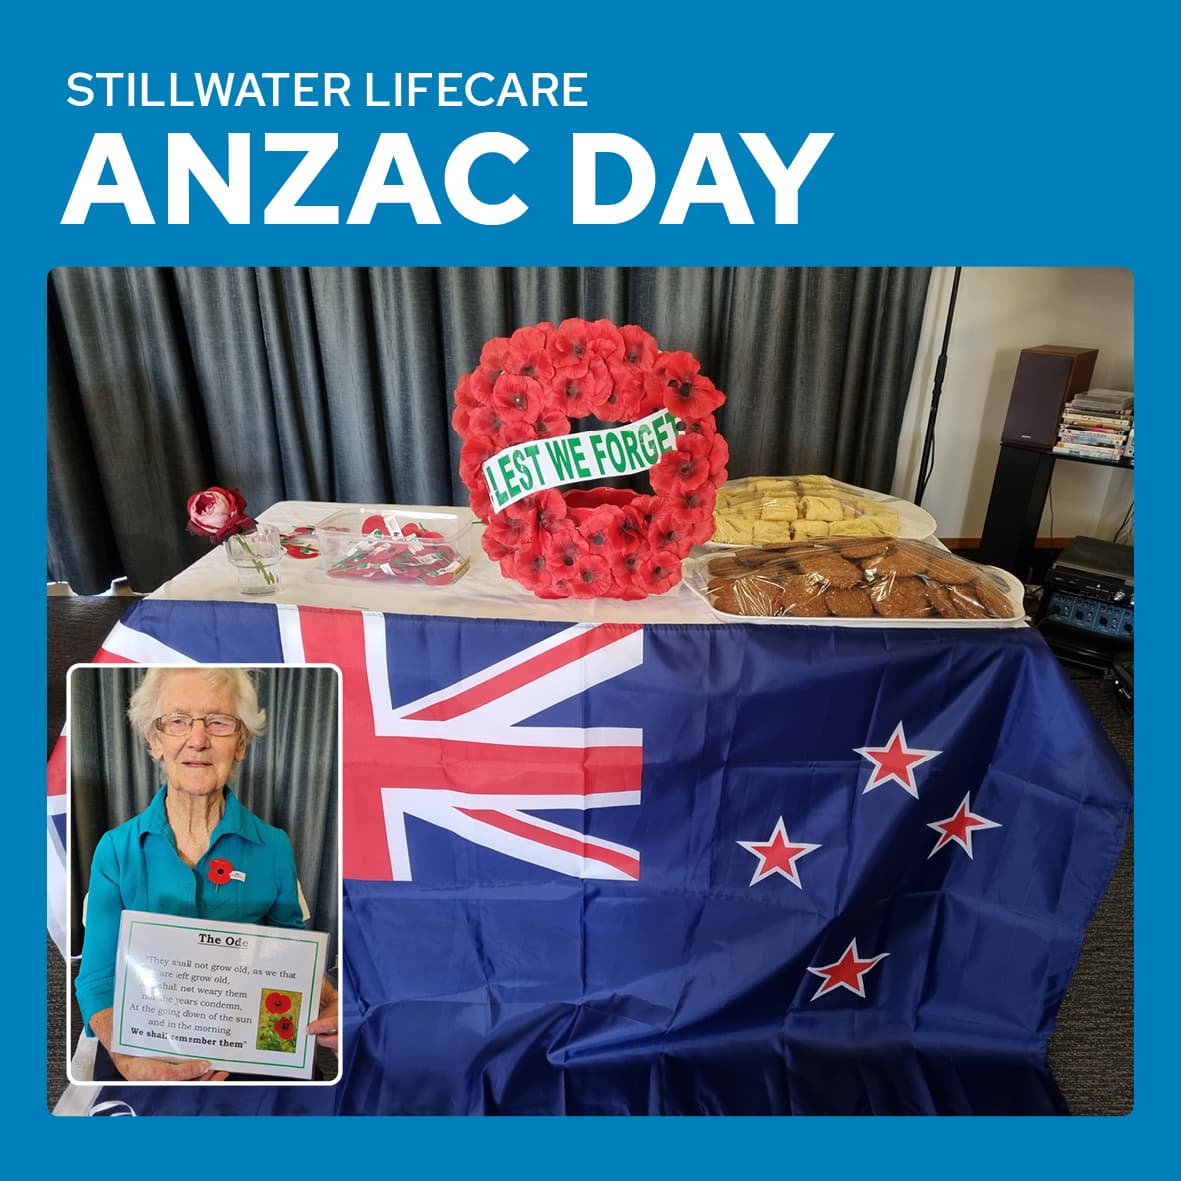 ​Stillwater Lifecare celebrates Anzac Day